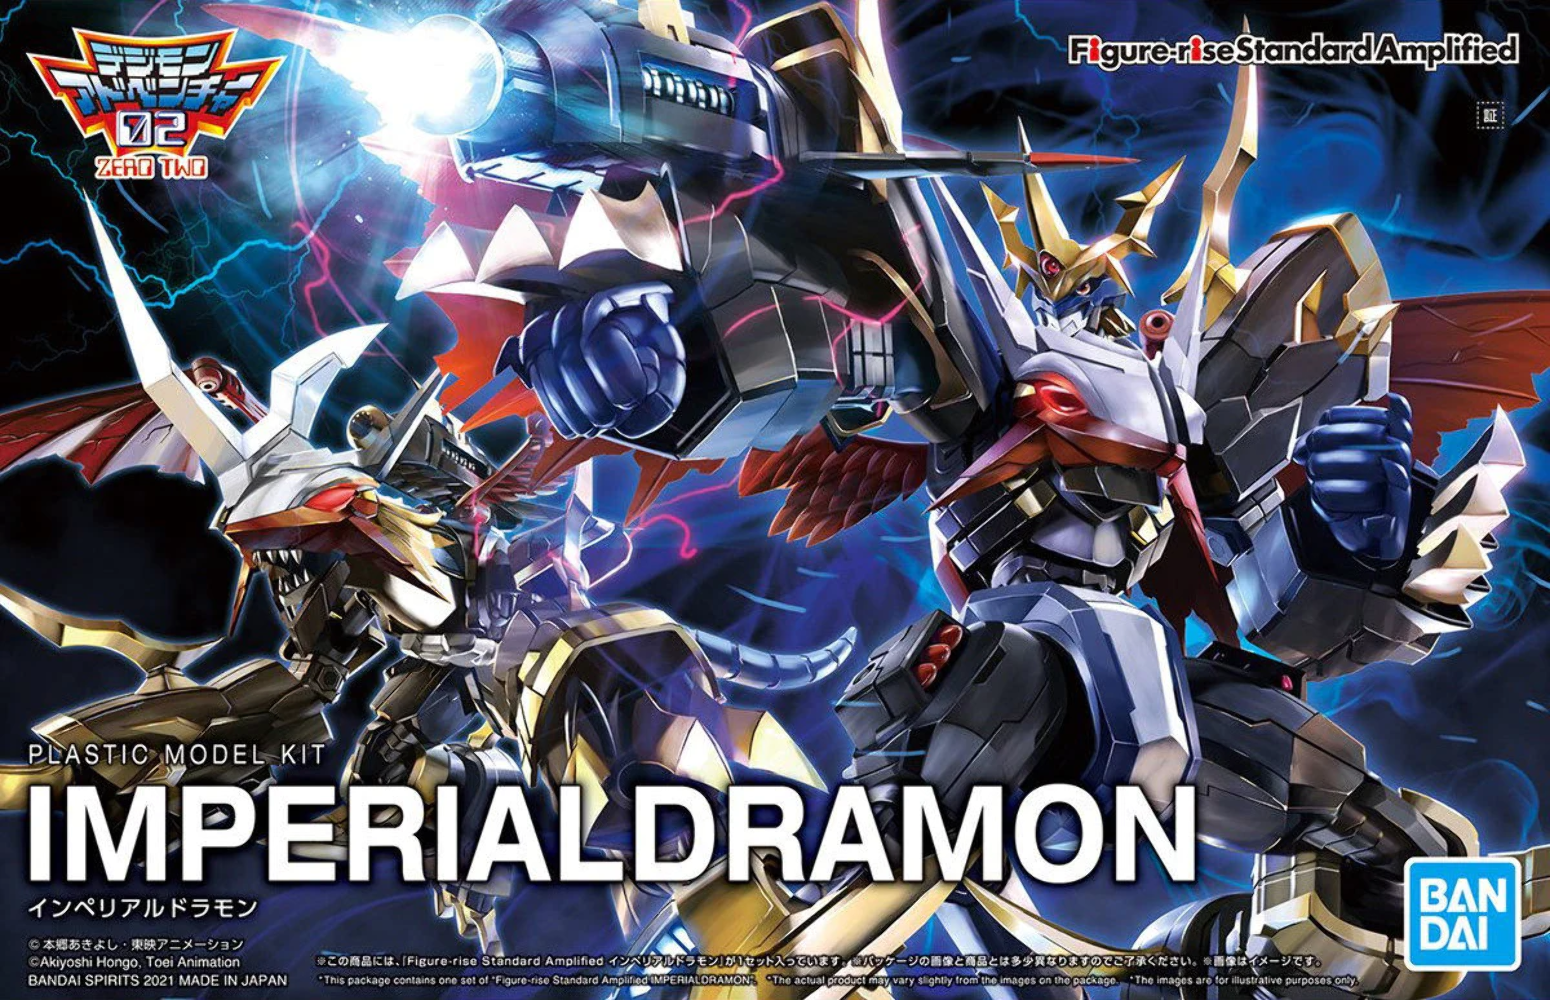 BANDAI 5060934 Imperialdramon (Amplified) "Digimon", Bandai Spirits Figure-rise Standard